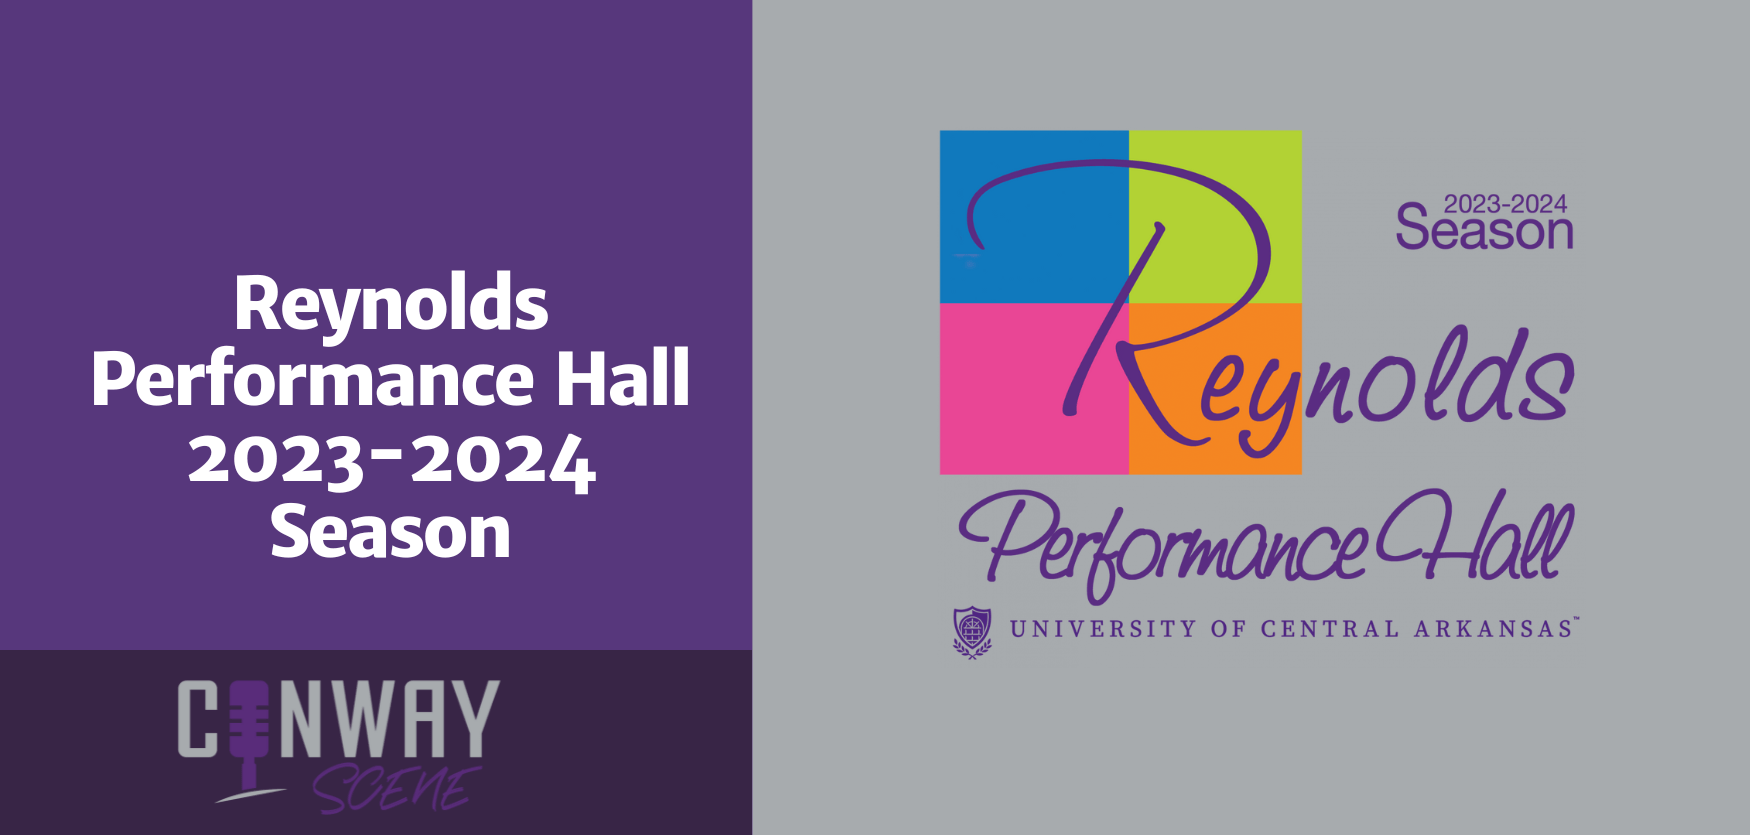 Reynolds Performance Hall 2023-2024 Season